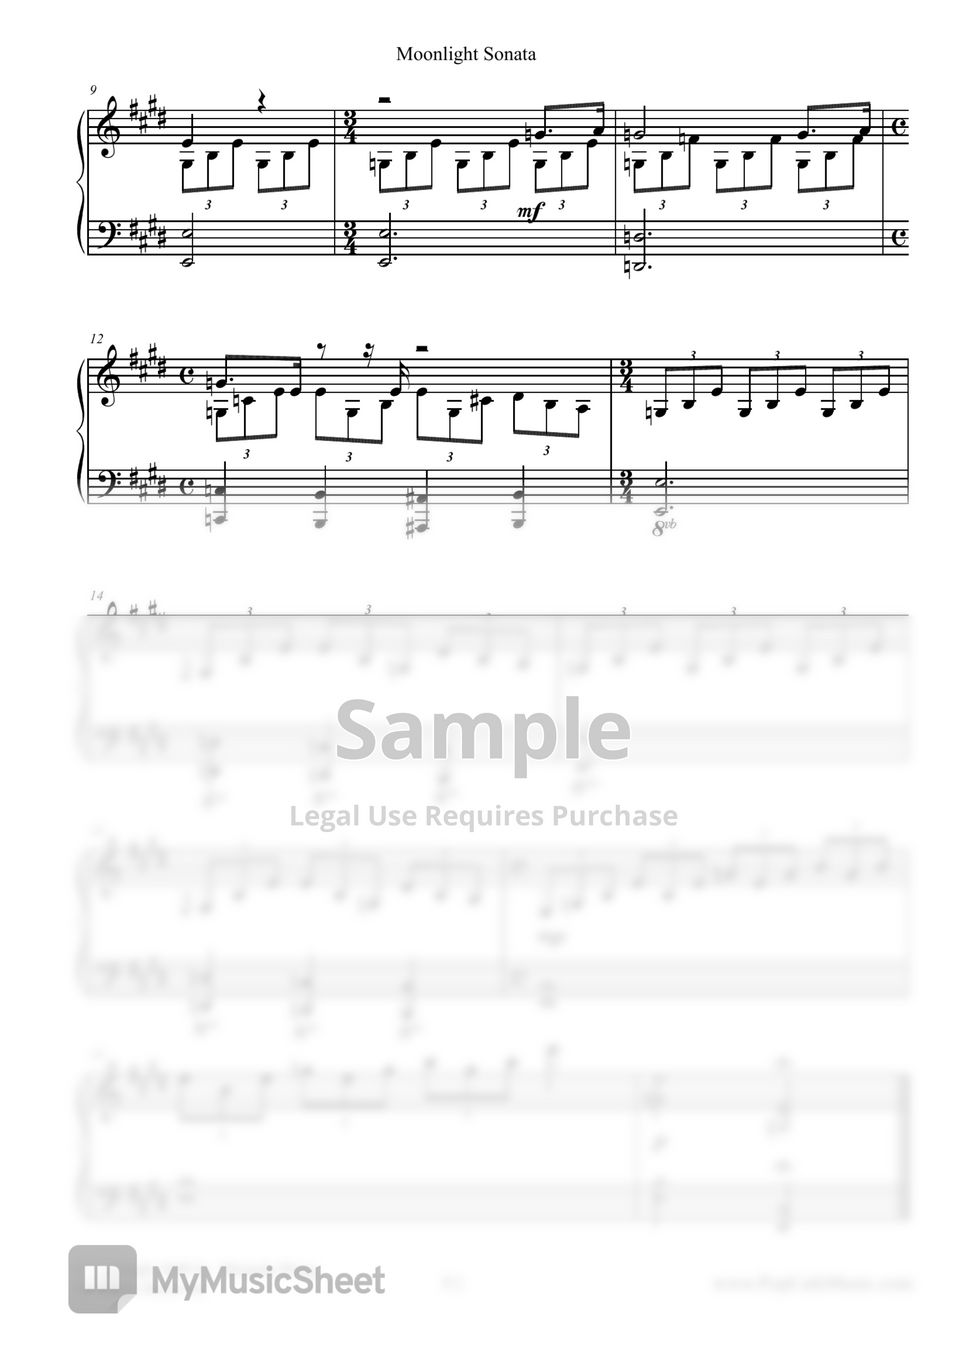 Beethoven - Moonlight Sonata - Easy Piano Sheet by Miranda Wong